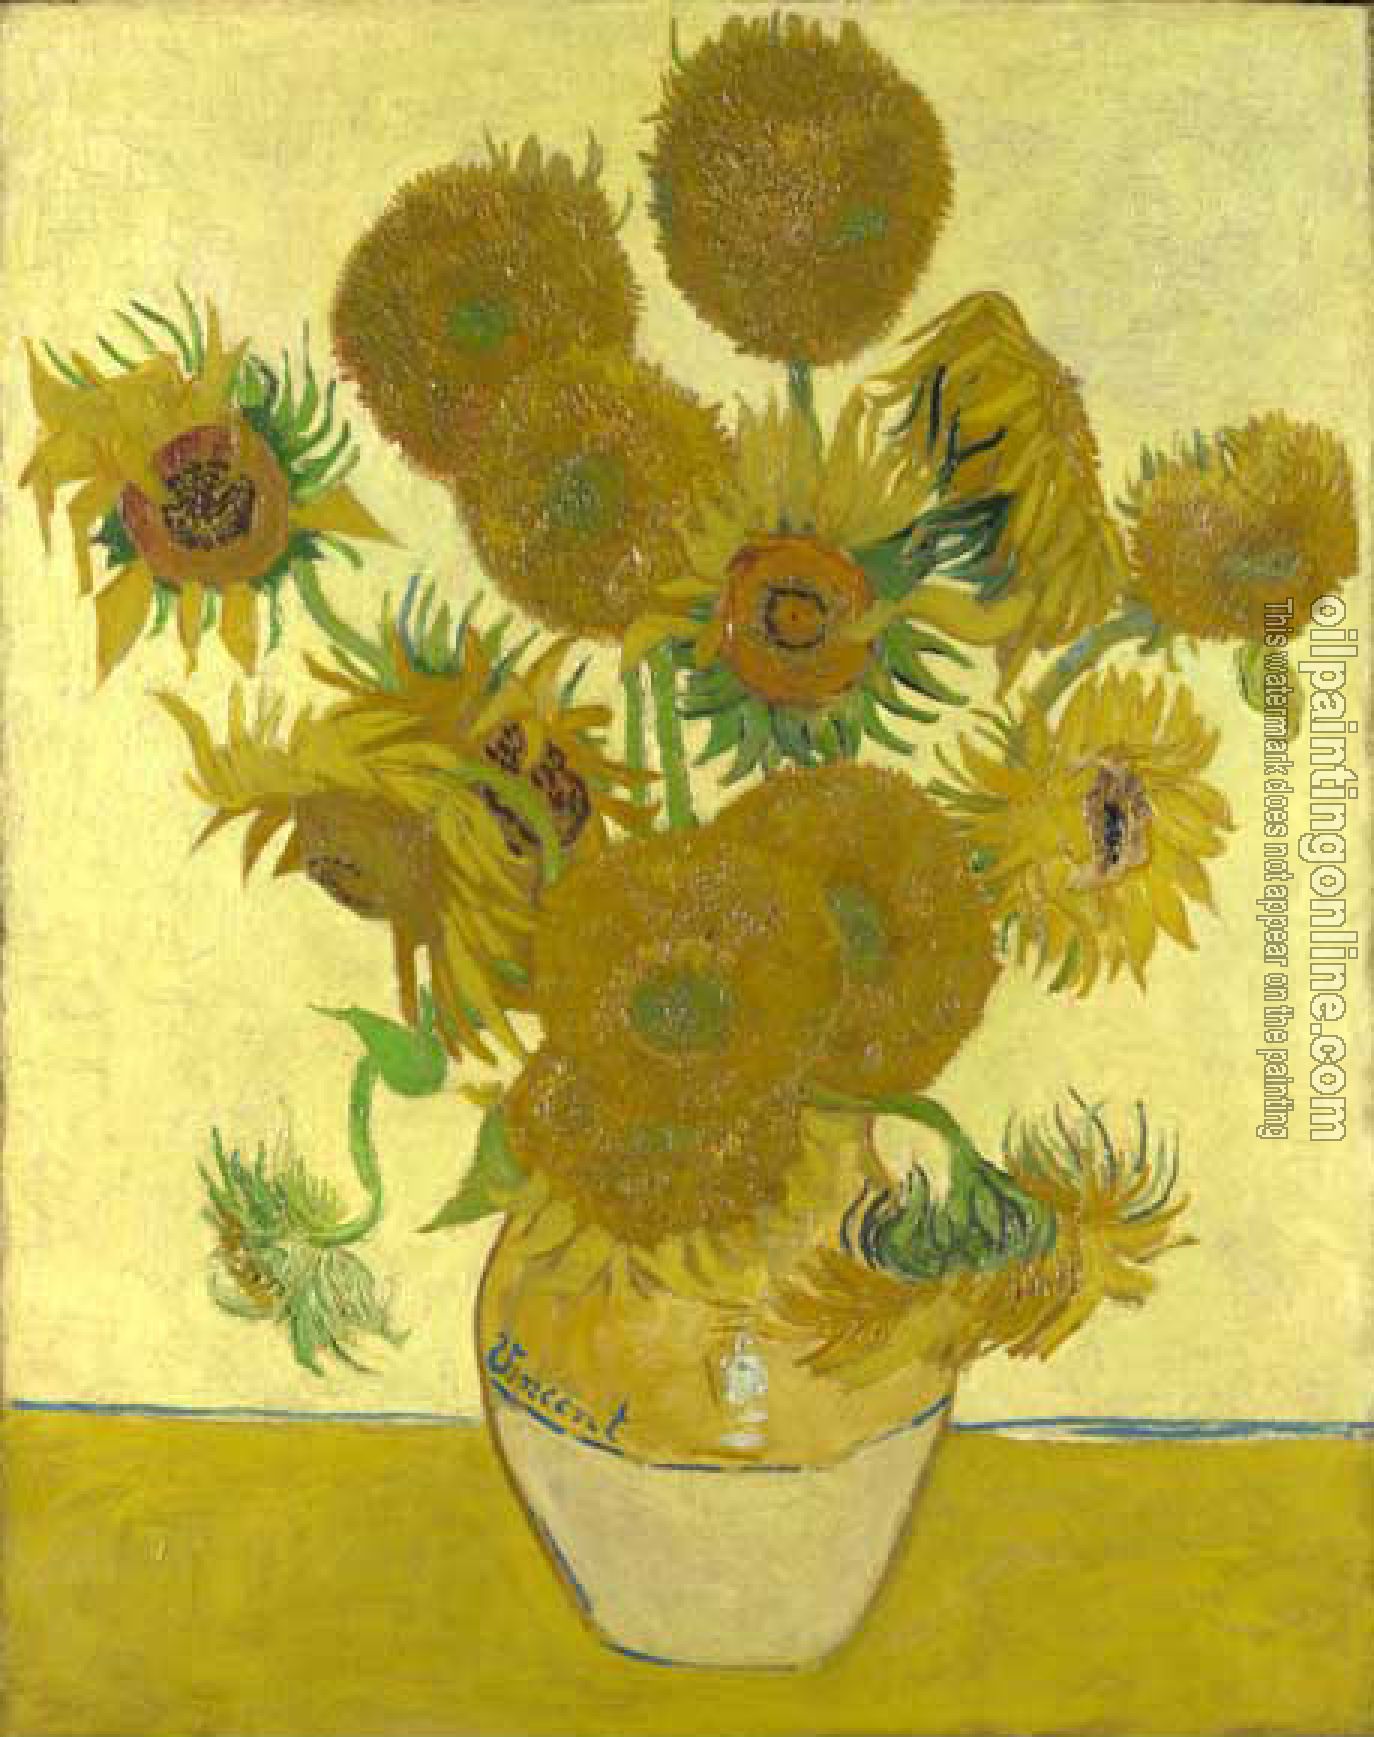 Gogh, Vincent van - Sunflowers